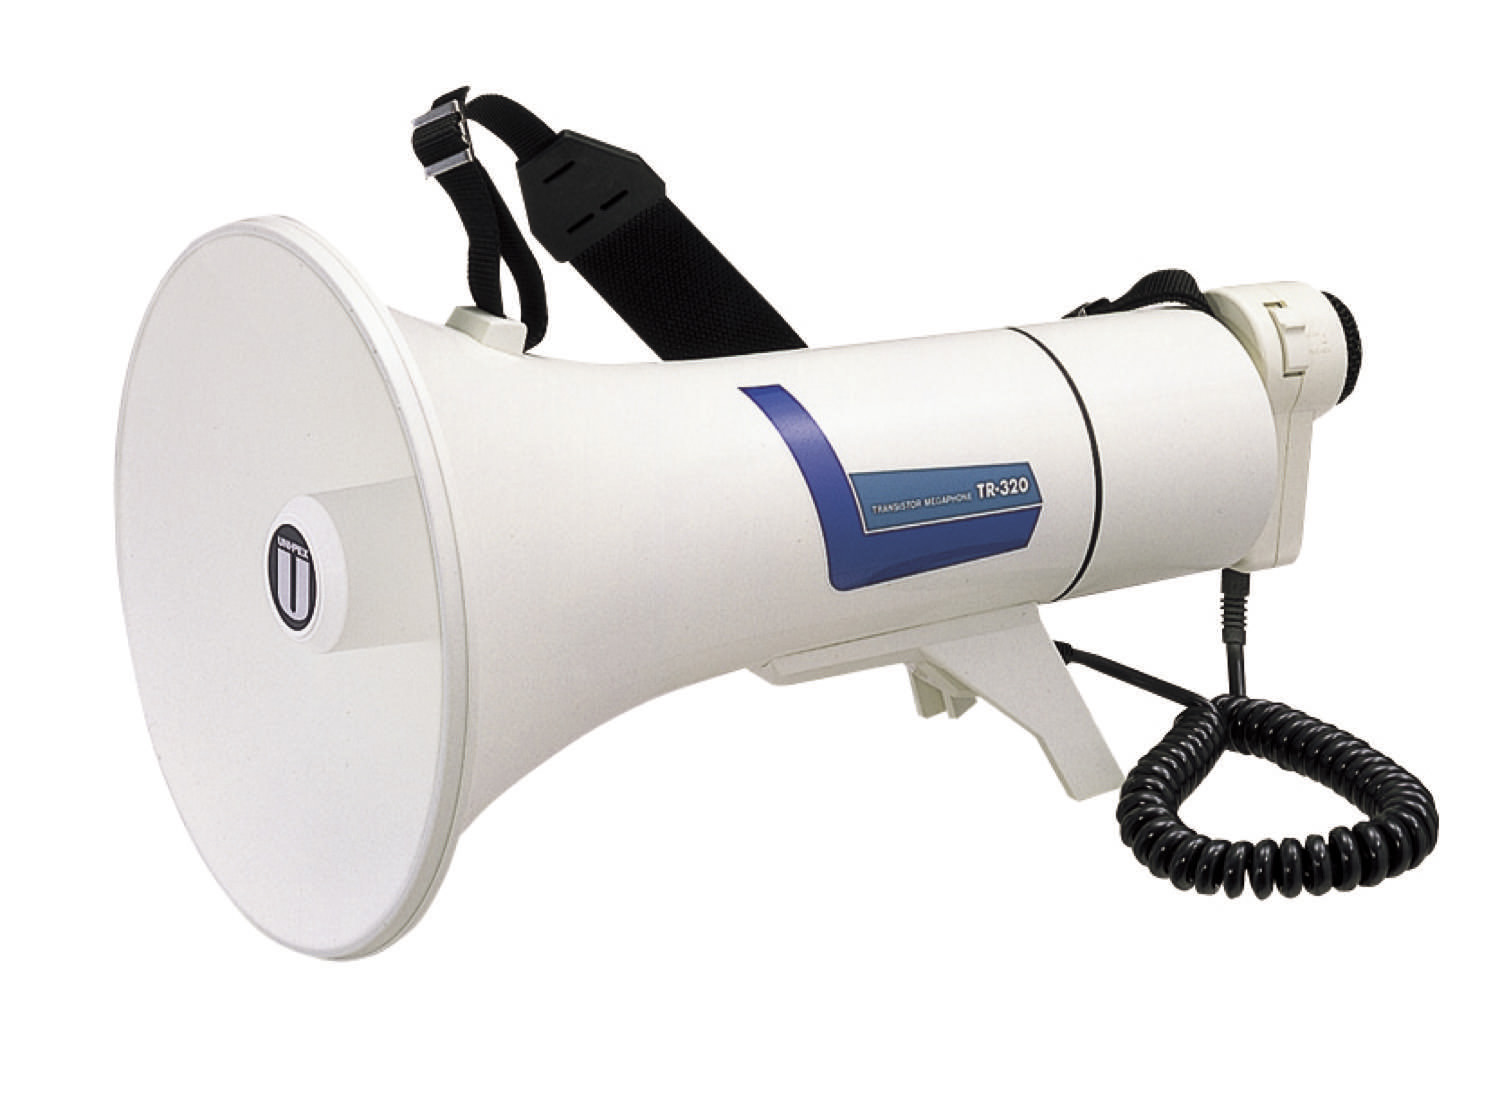 UNI-PEX ユニペックス メガホン 拡声器 TR-215SA 防滴形 サイレン付 防じん・防水機能性 UNI-PEX スピーカー マイク 